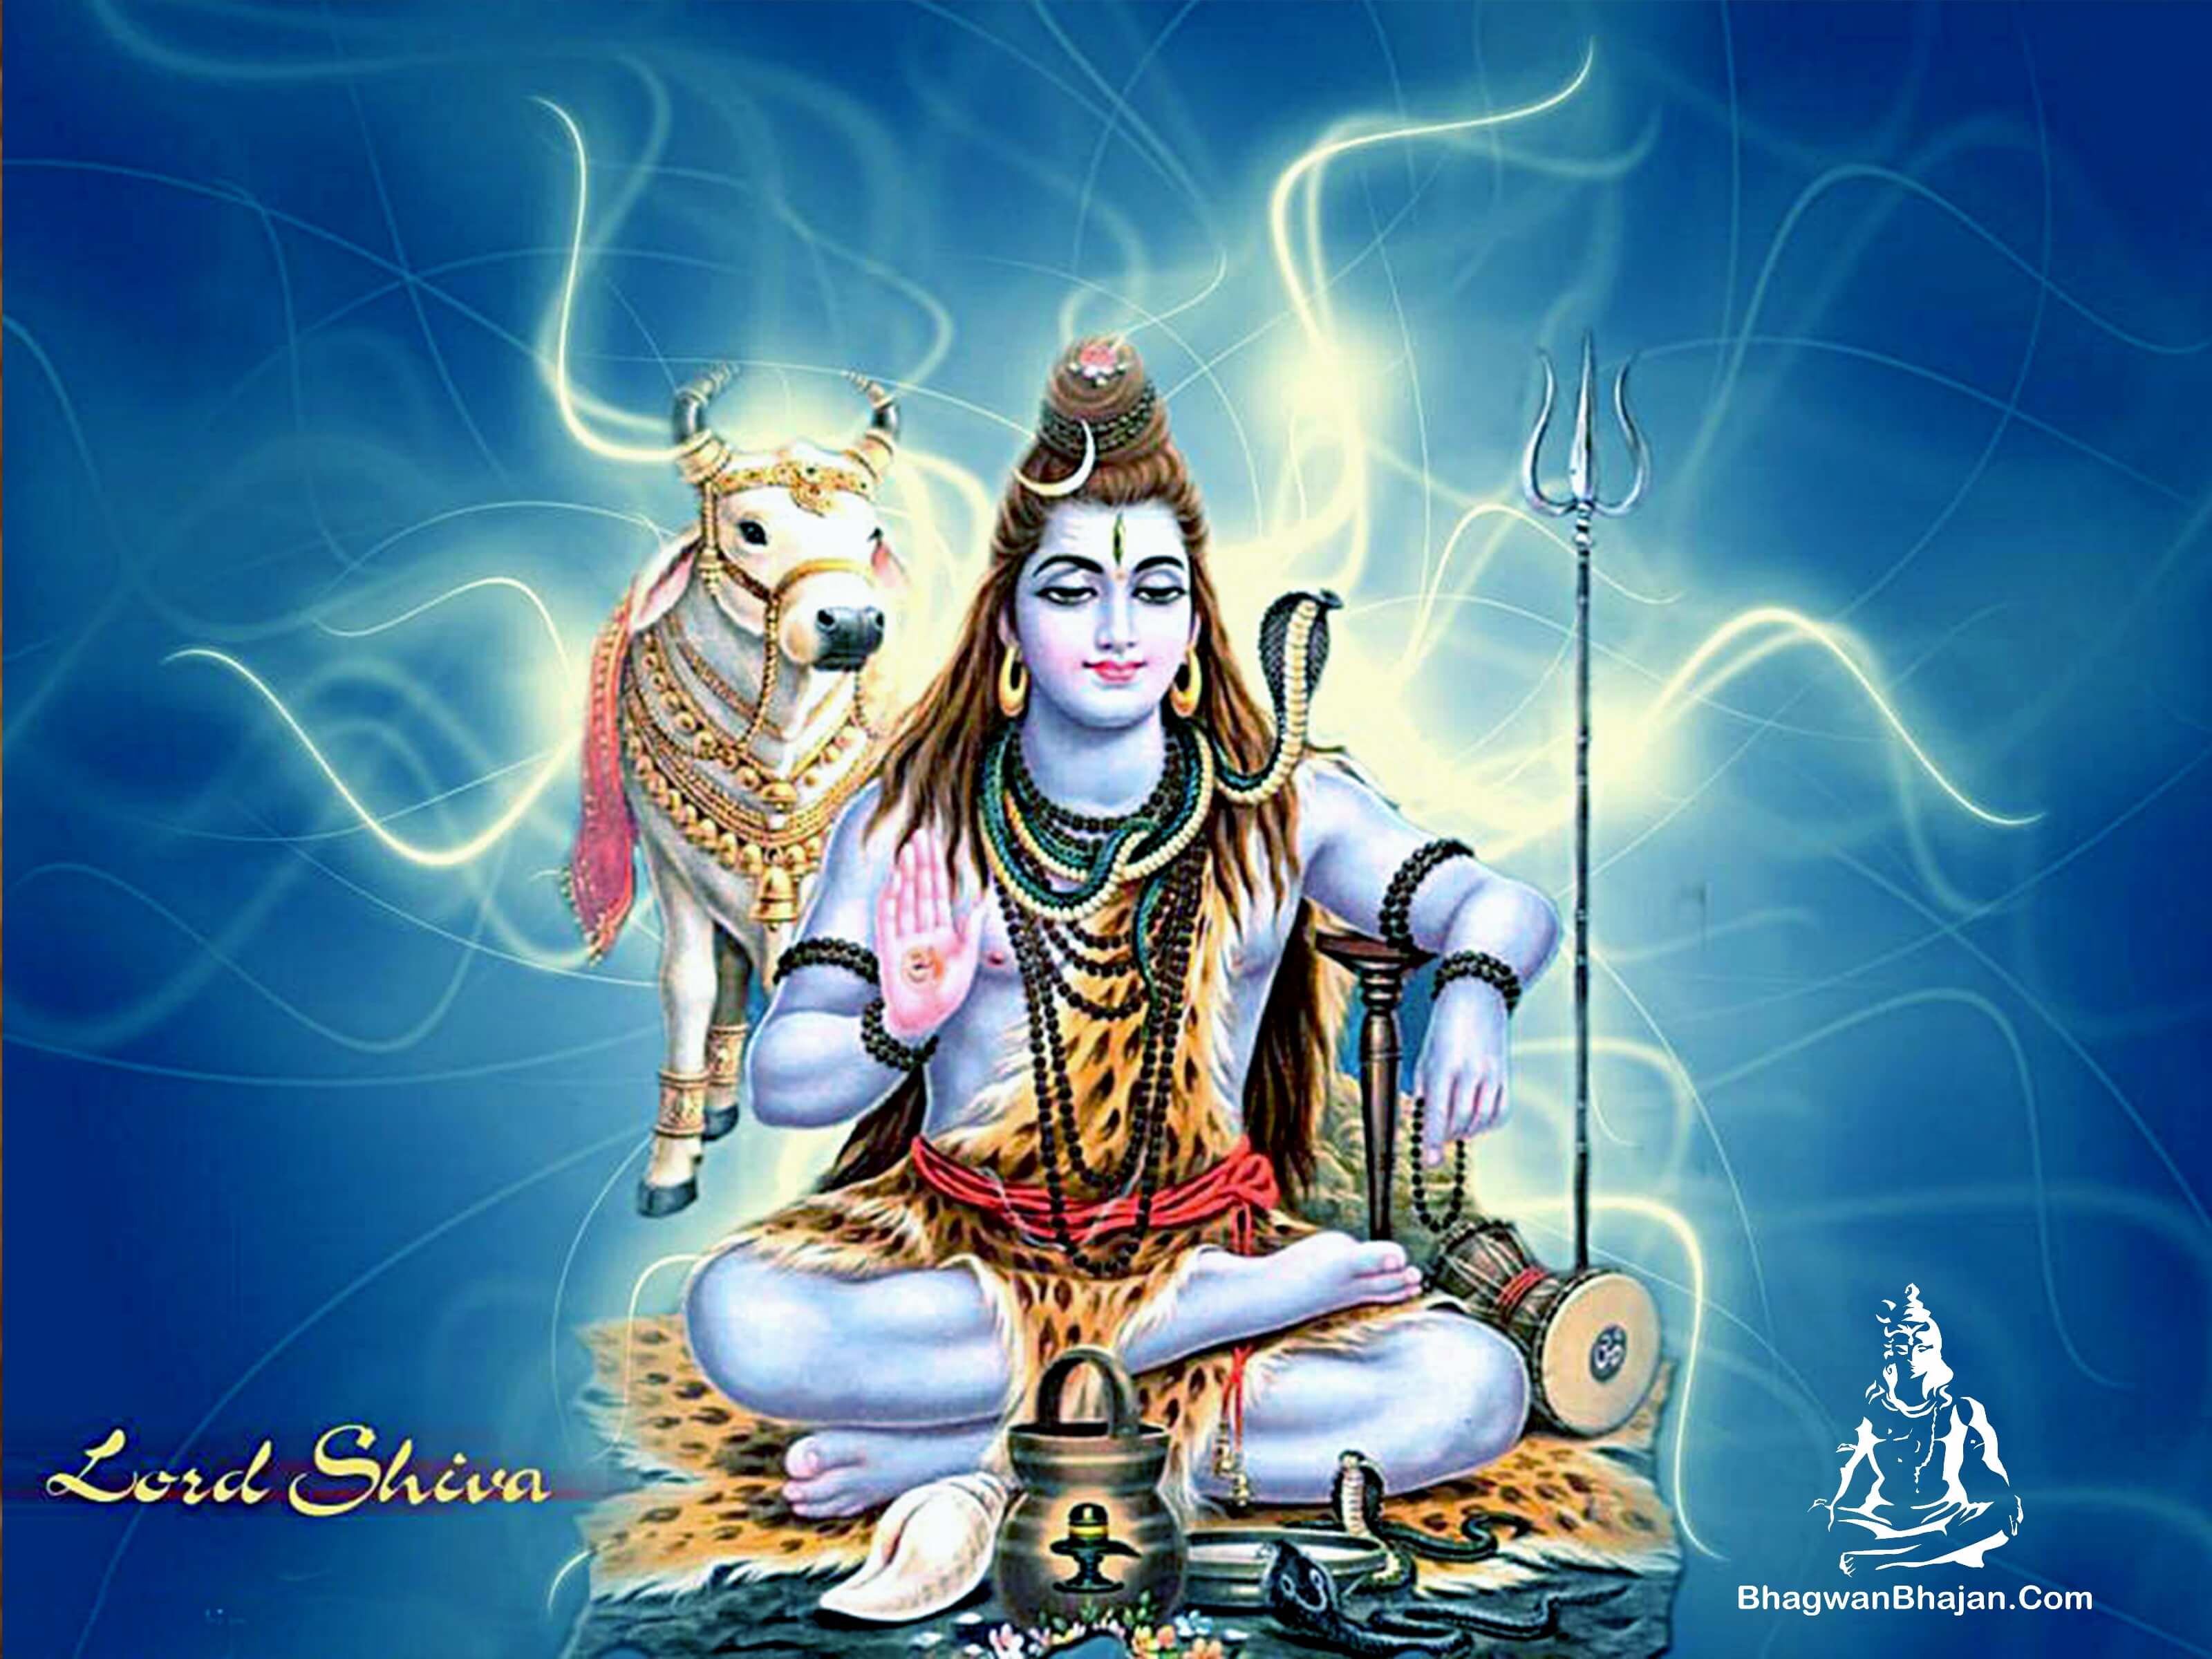 Bhagwan Shiv Image & Wallpaper. Download Free HD Wallpaper, Photos & Image of Lord Shiv Shankar